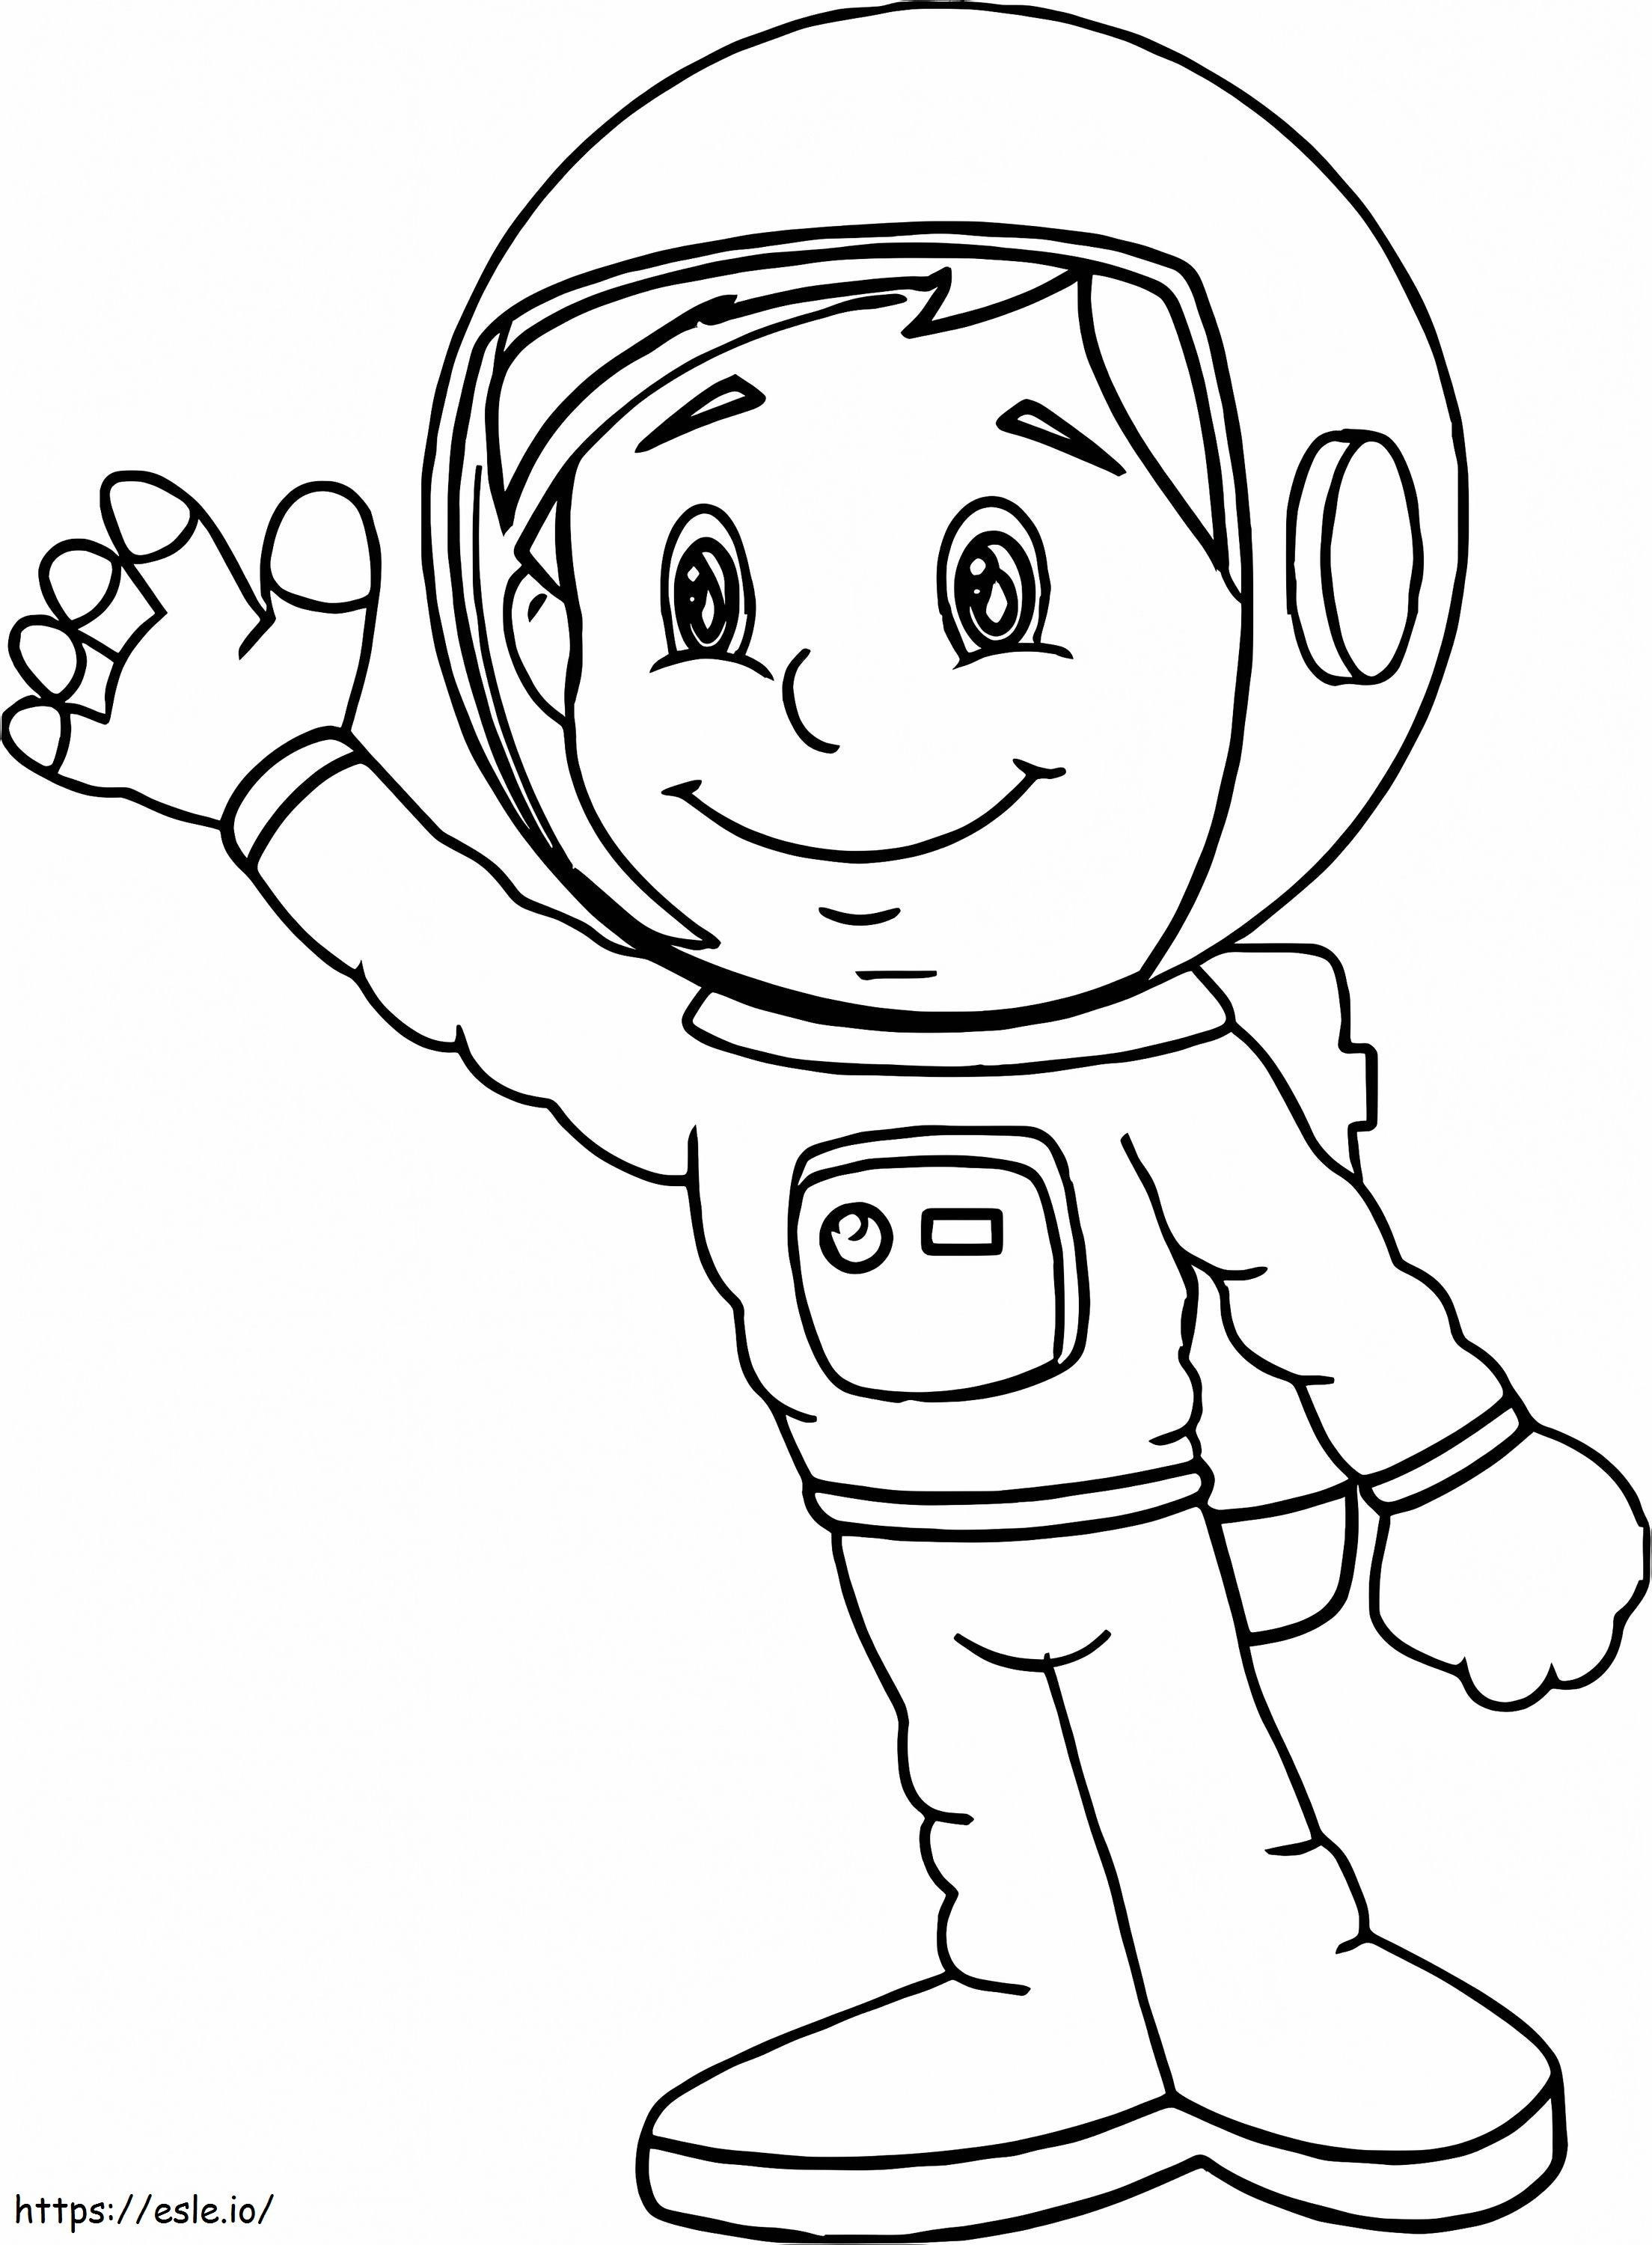 pequeño astronauta para colorear